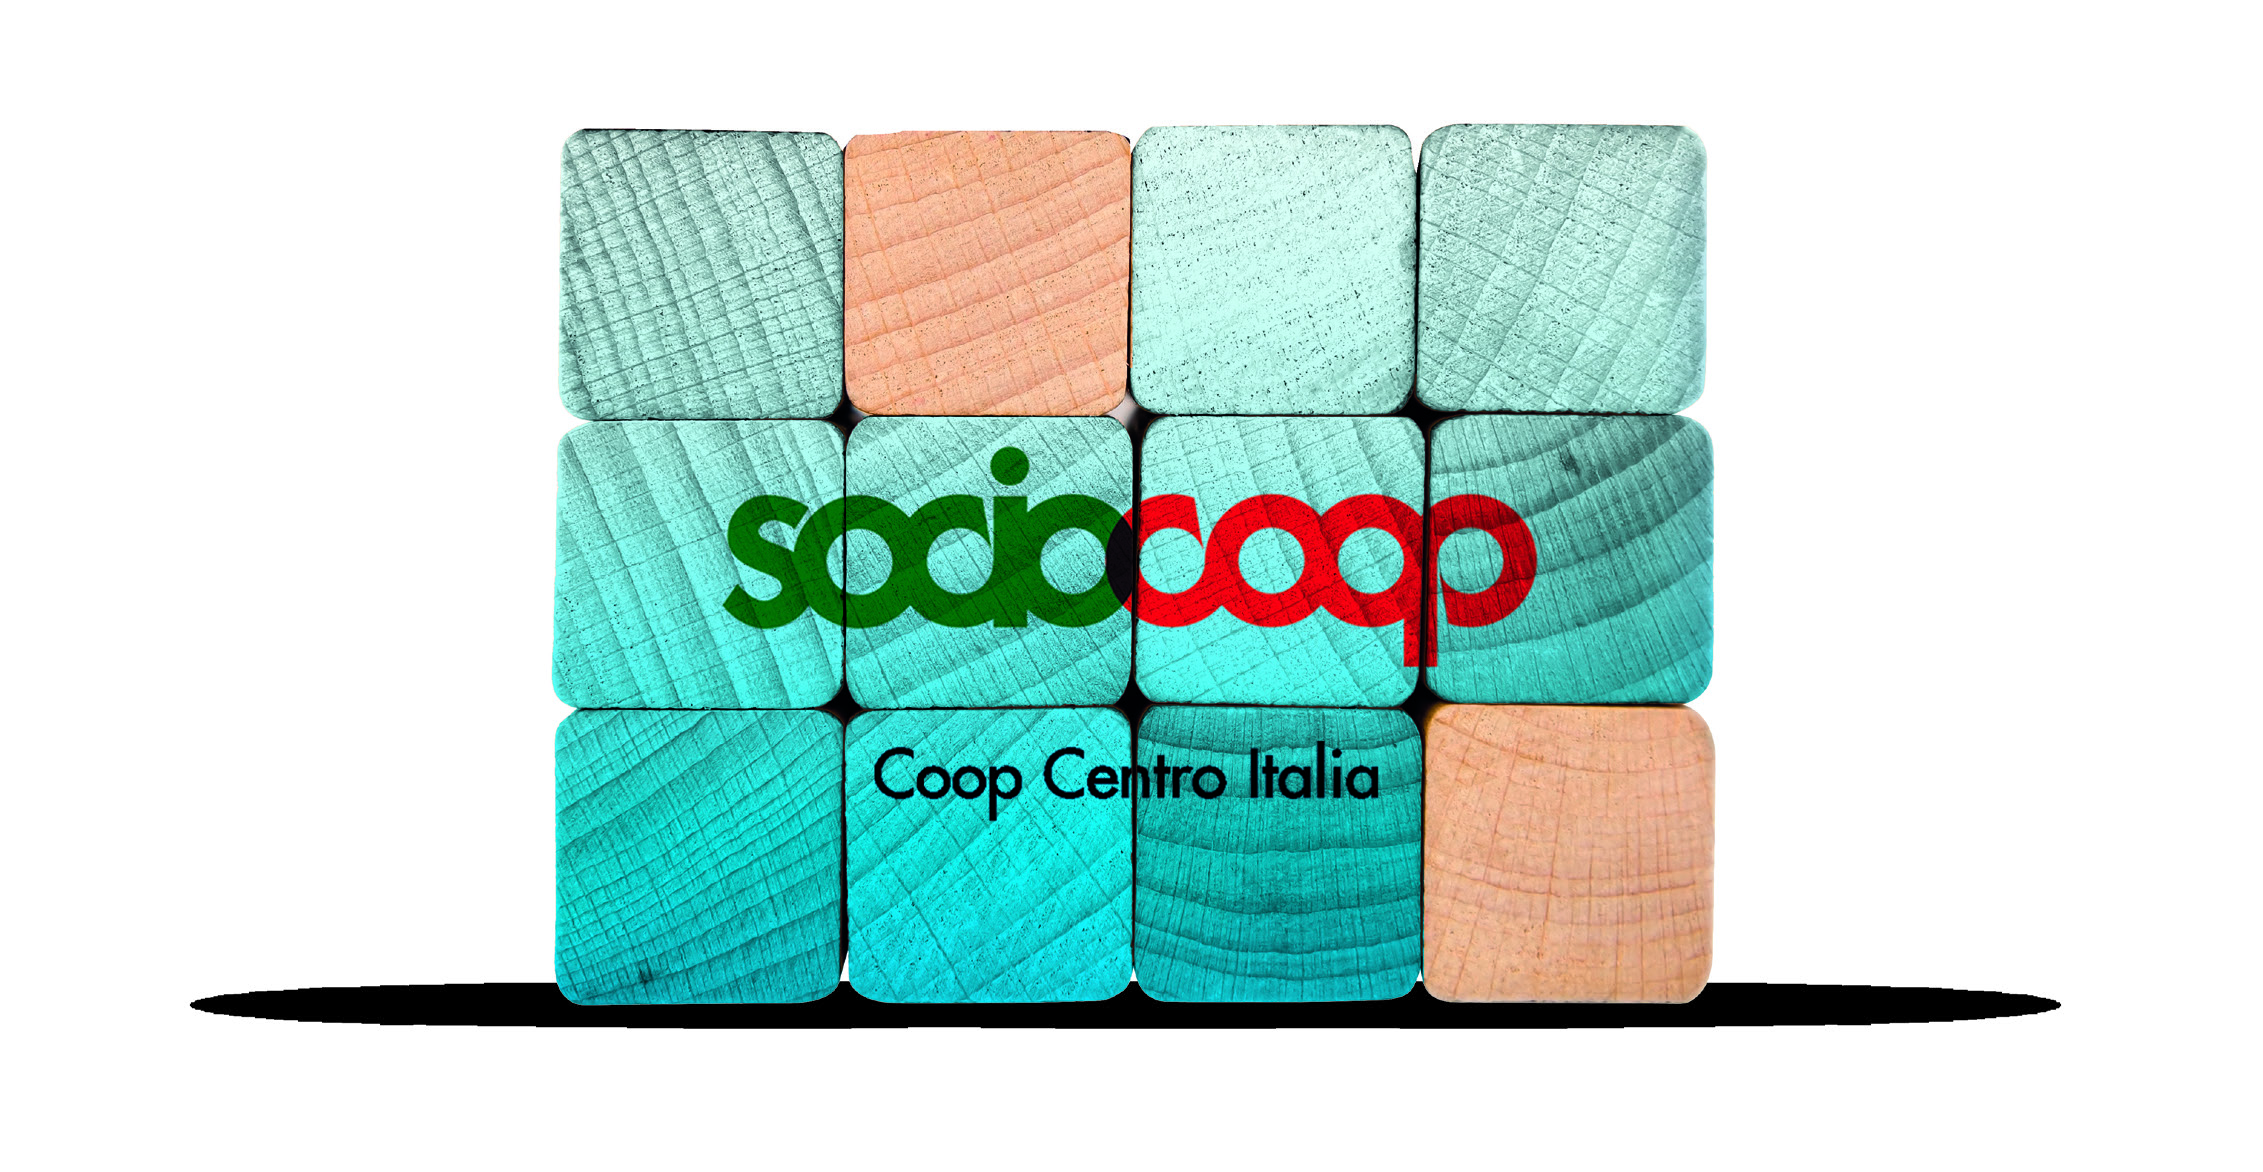 socio coop centro italia: I